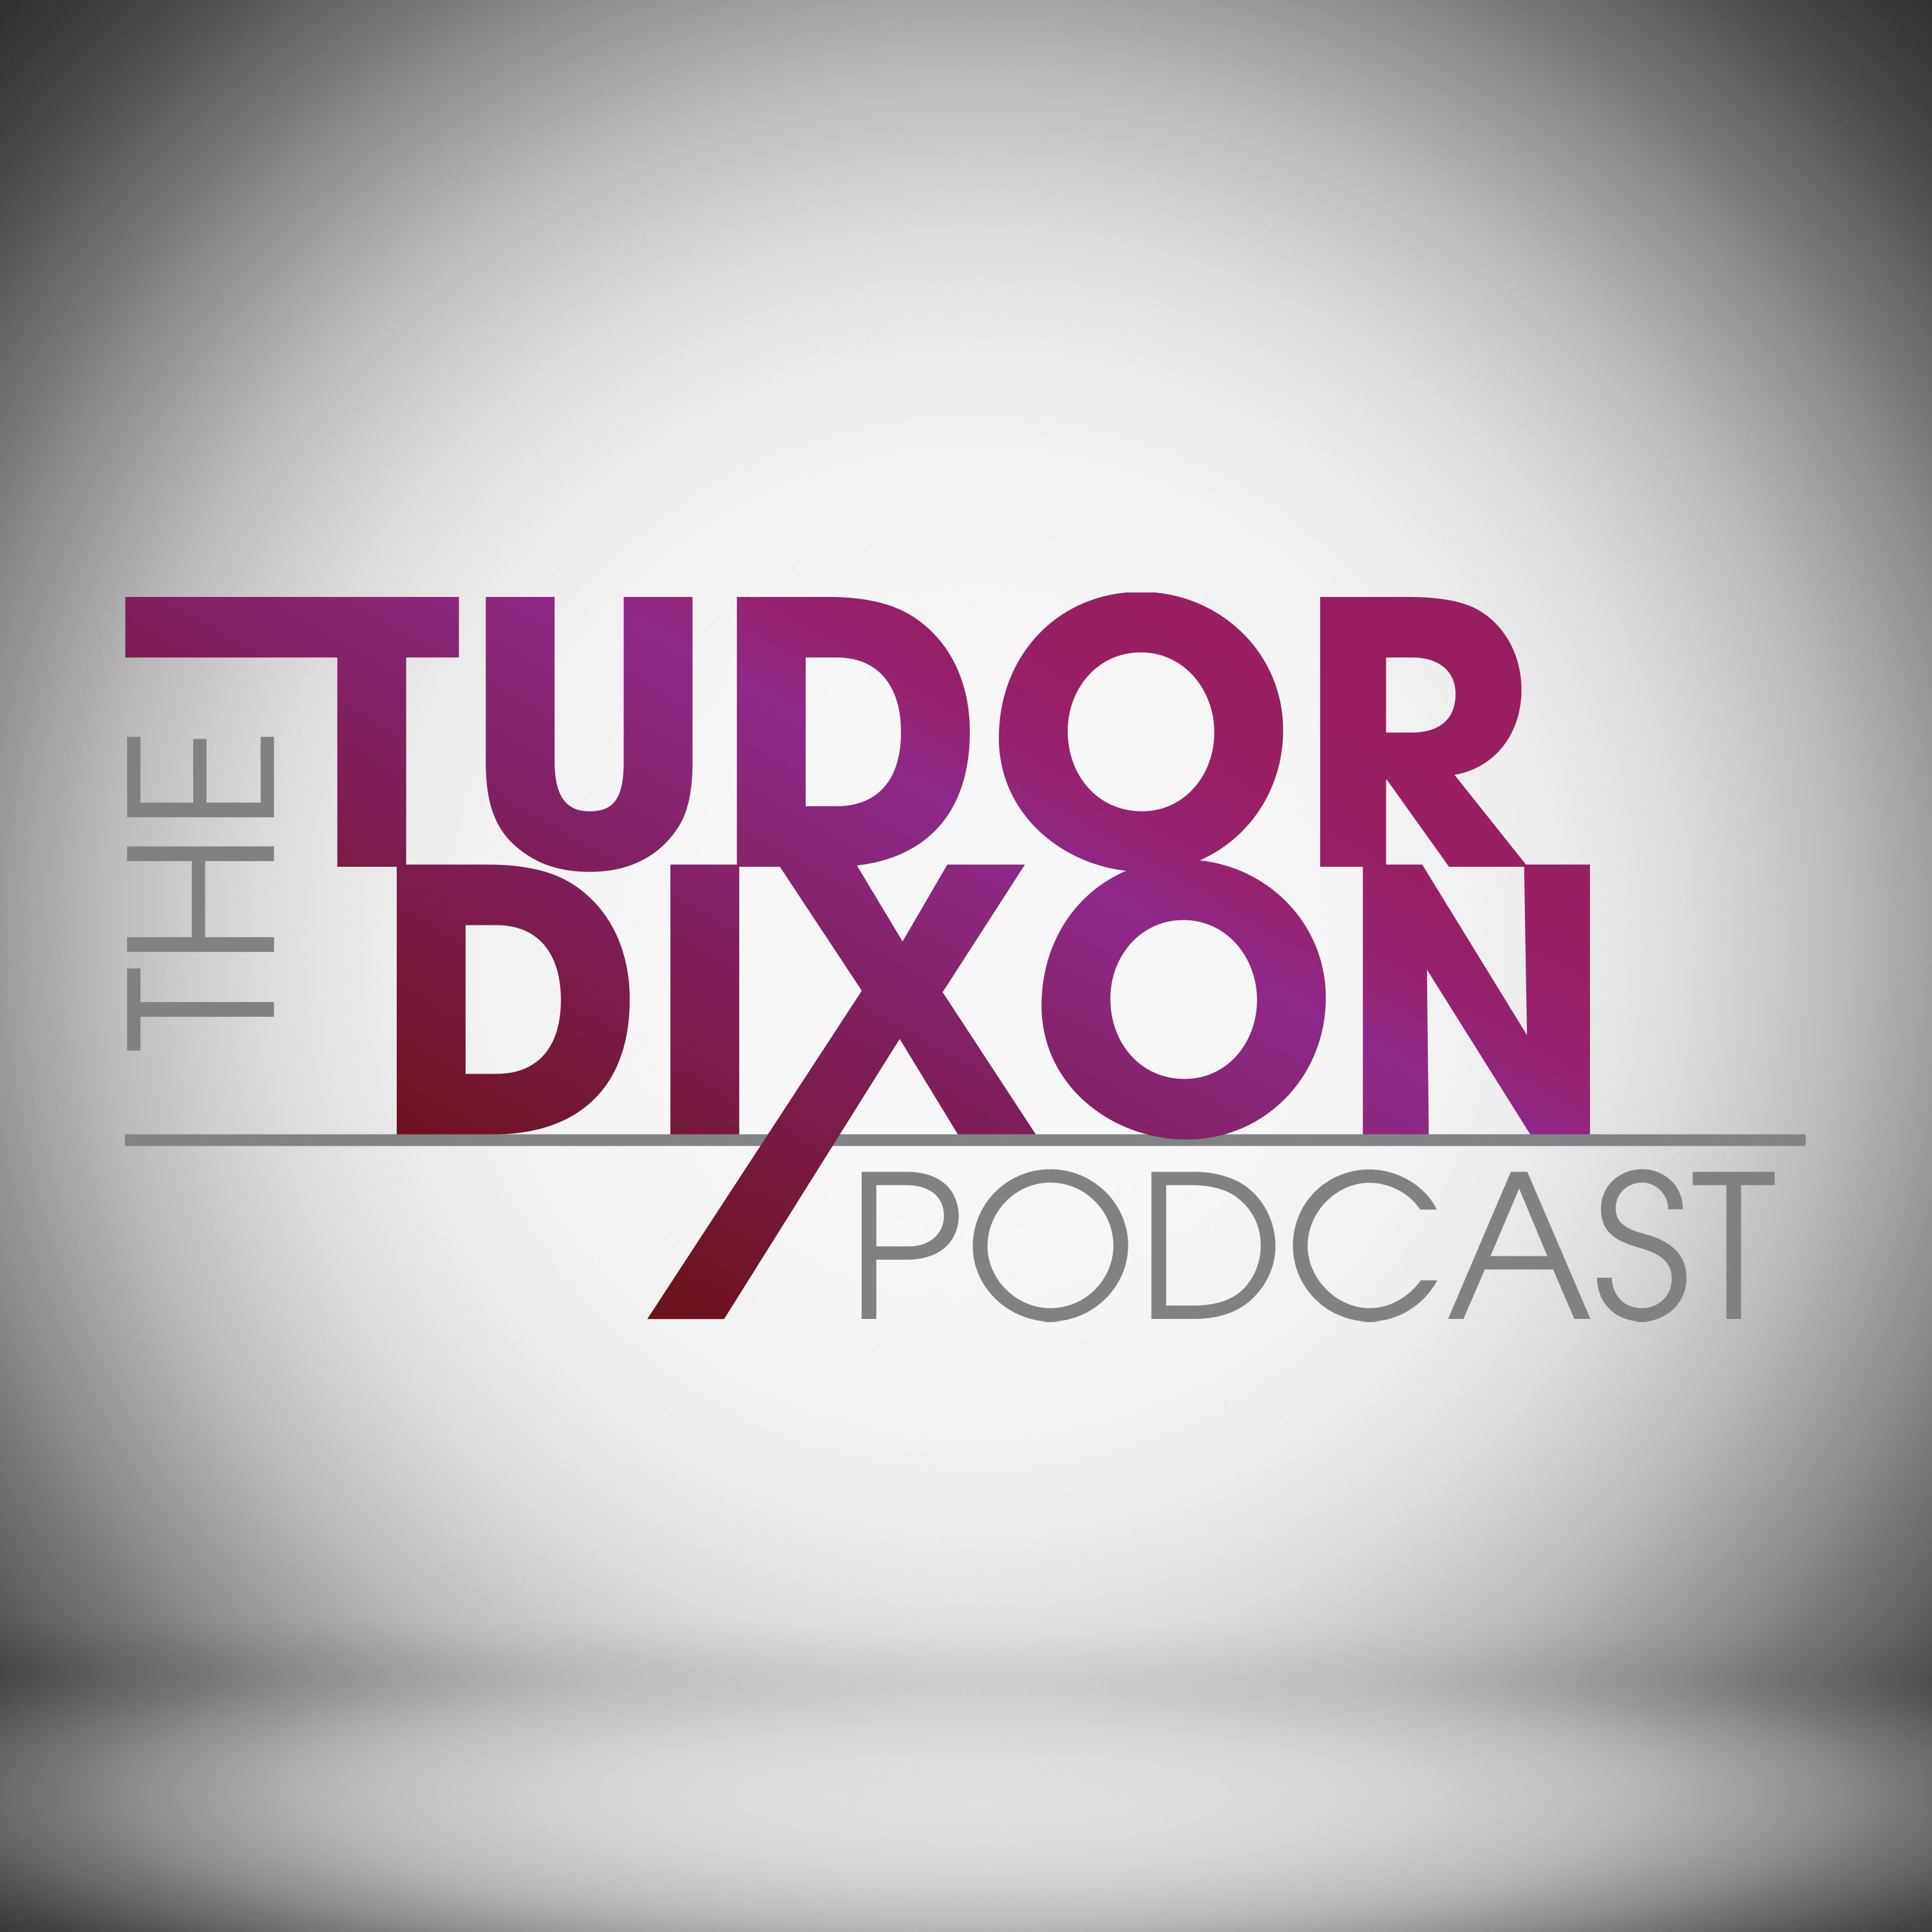 The Tudor Dixon Podcast: Jason Aldean Sheds Lights on the Left's Soft on Crime Policies